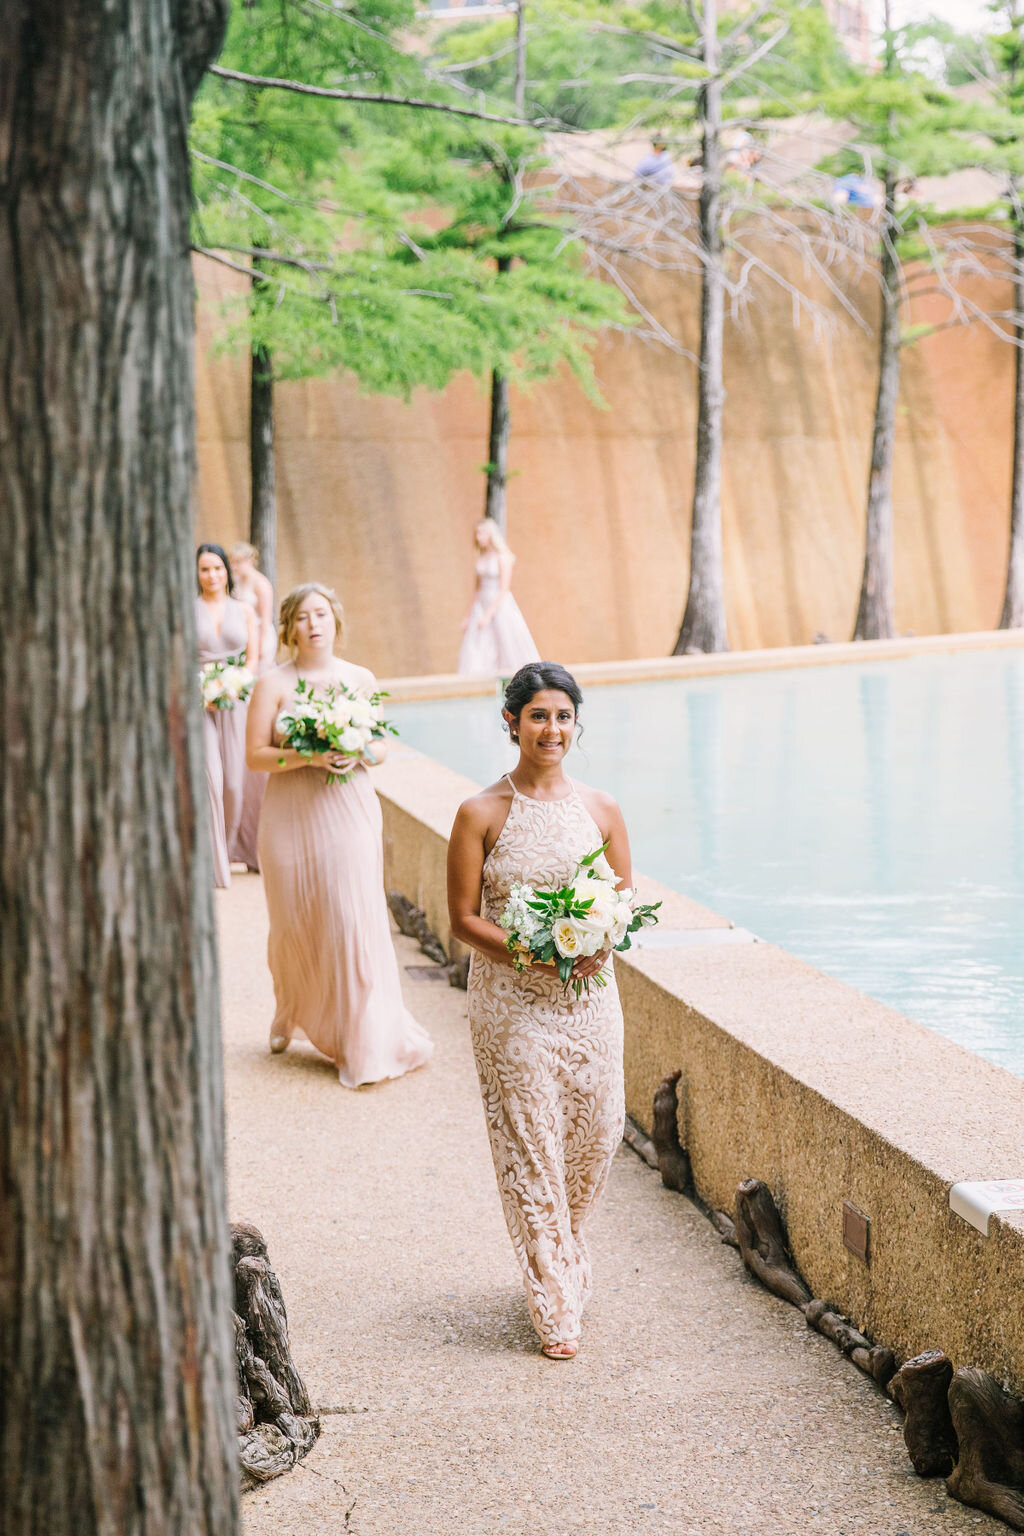 Ellen-Ashton-Photography-Dallas-Wedding-Photographers-Girt-and-gold-events-weddings48.jpg